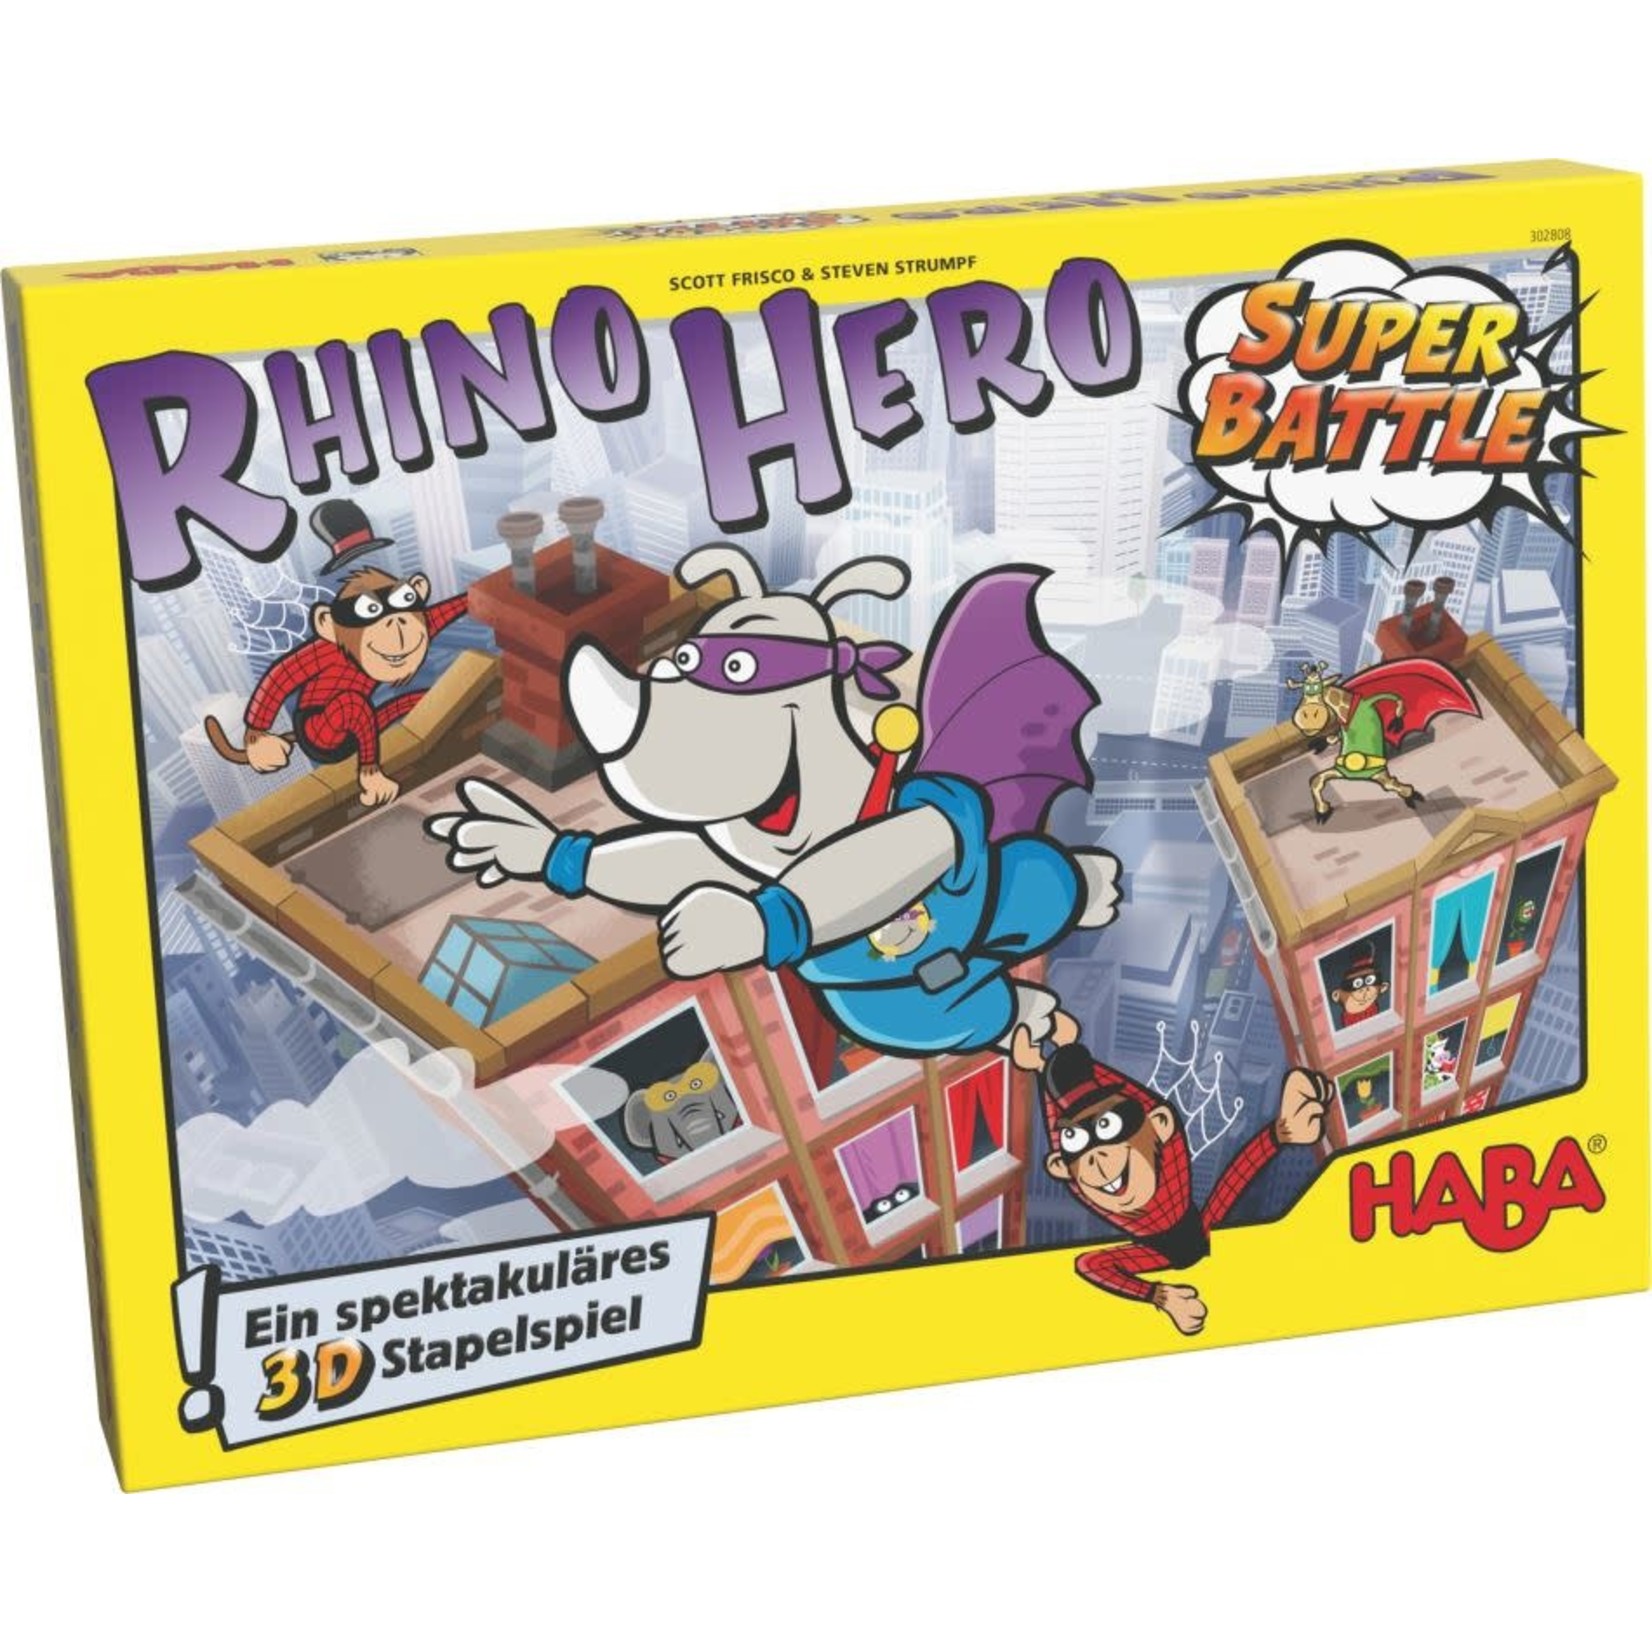 HABA Rhino Hero Super Battle